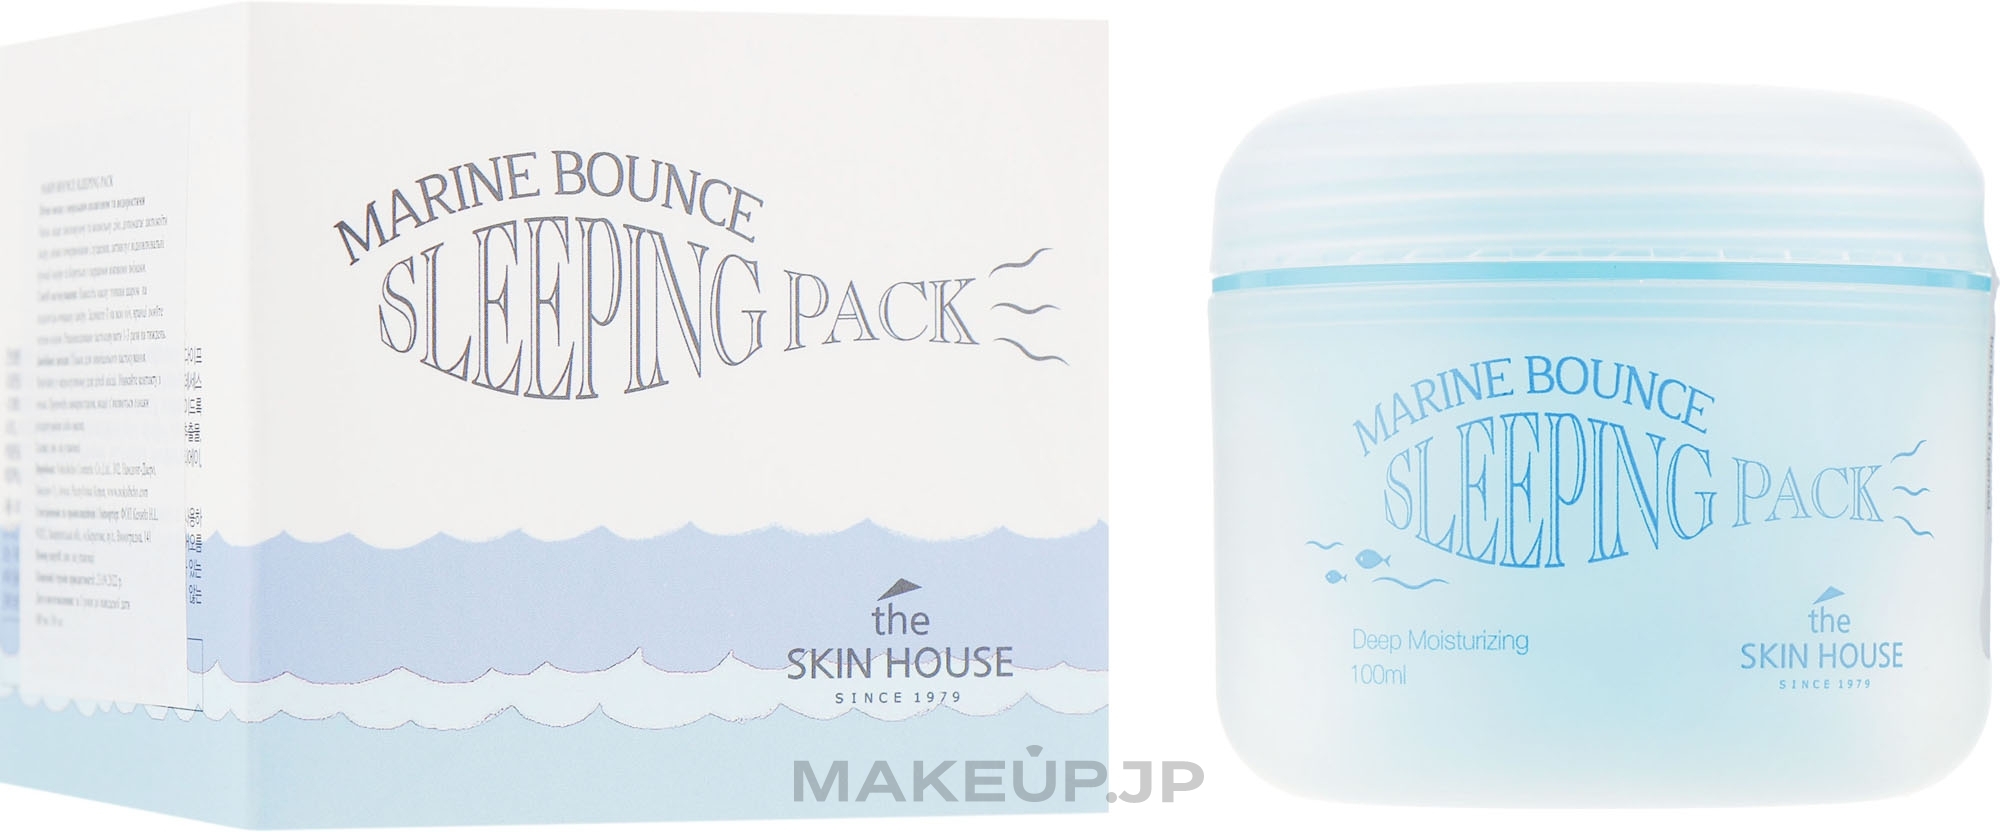 Night Marine Collagen Mask - The Skin House Marine Bounce Sleeping Pack — photo 100 ml